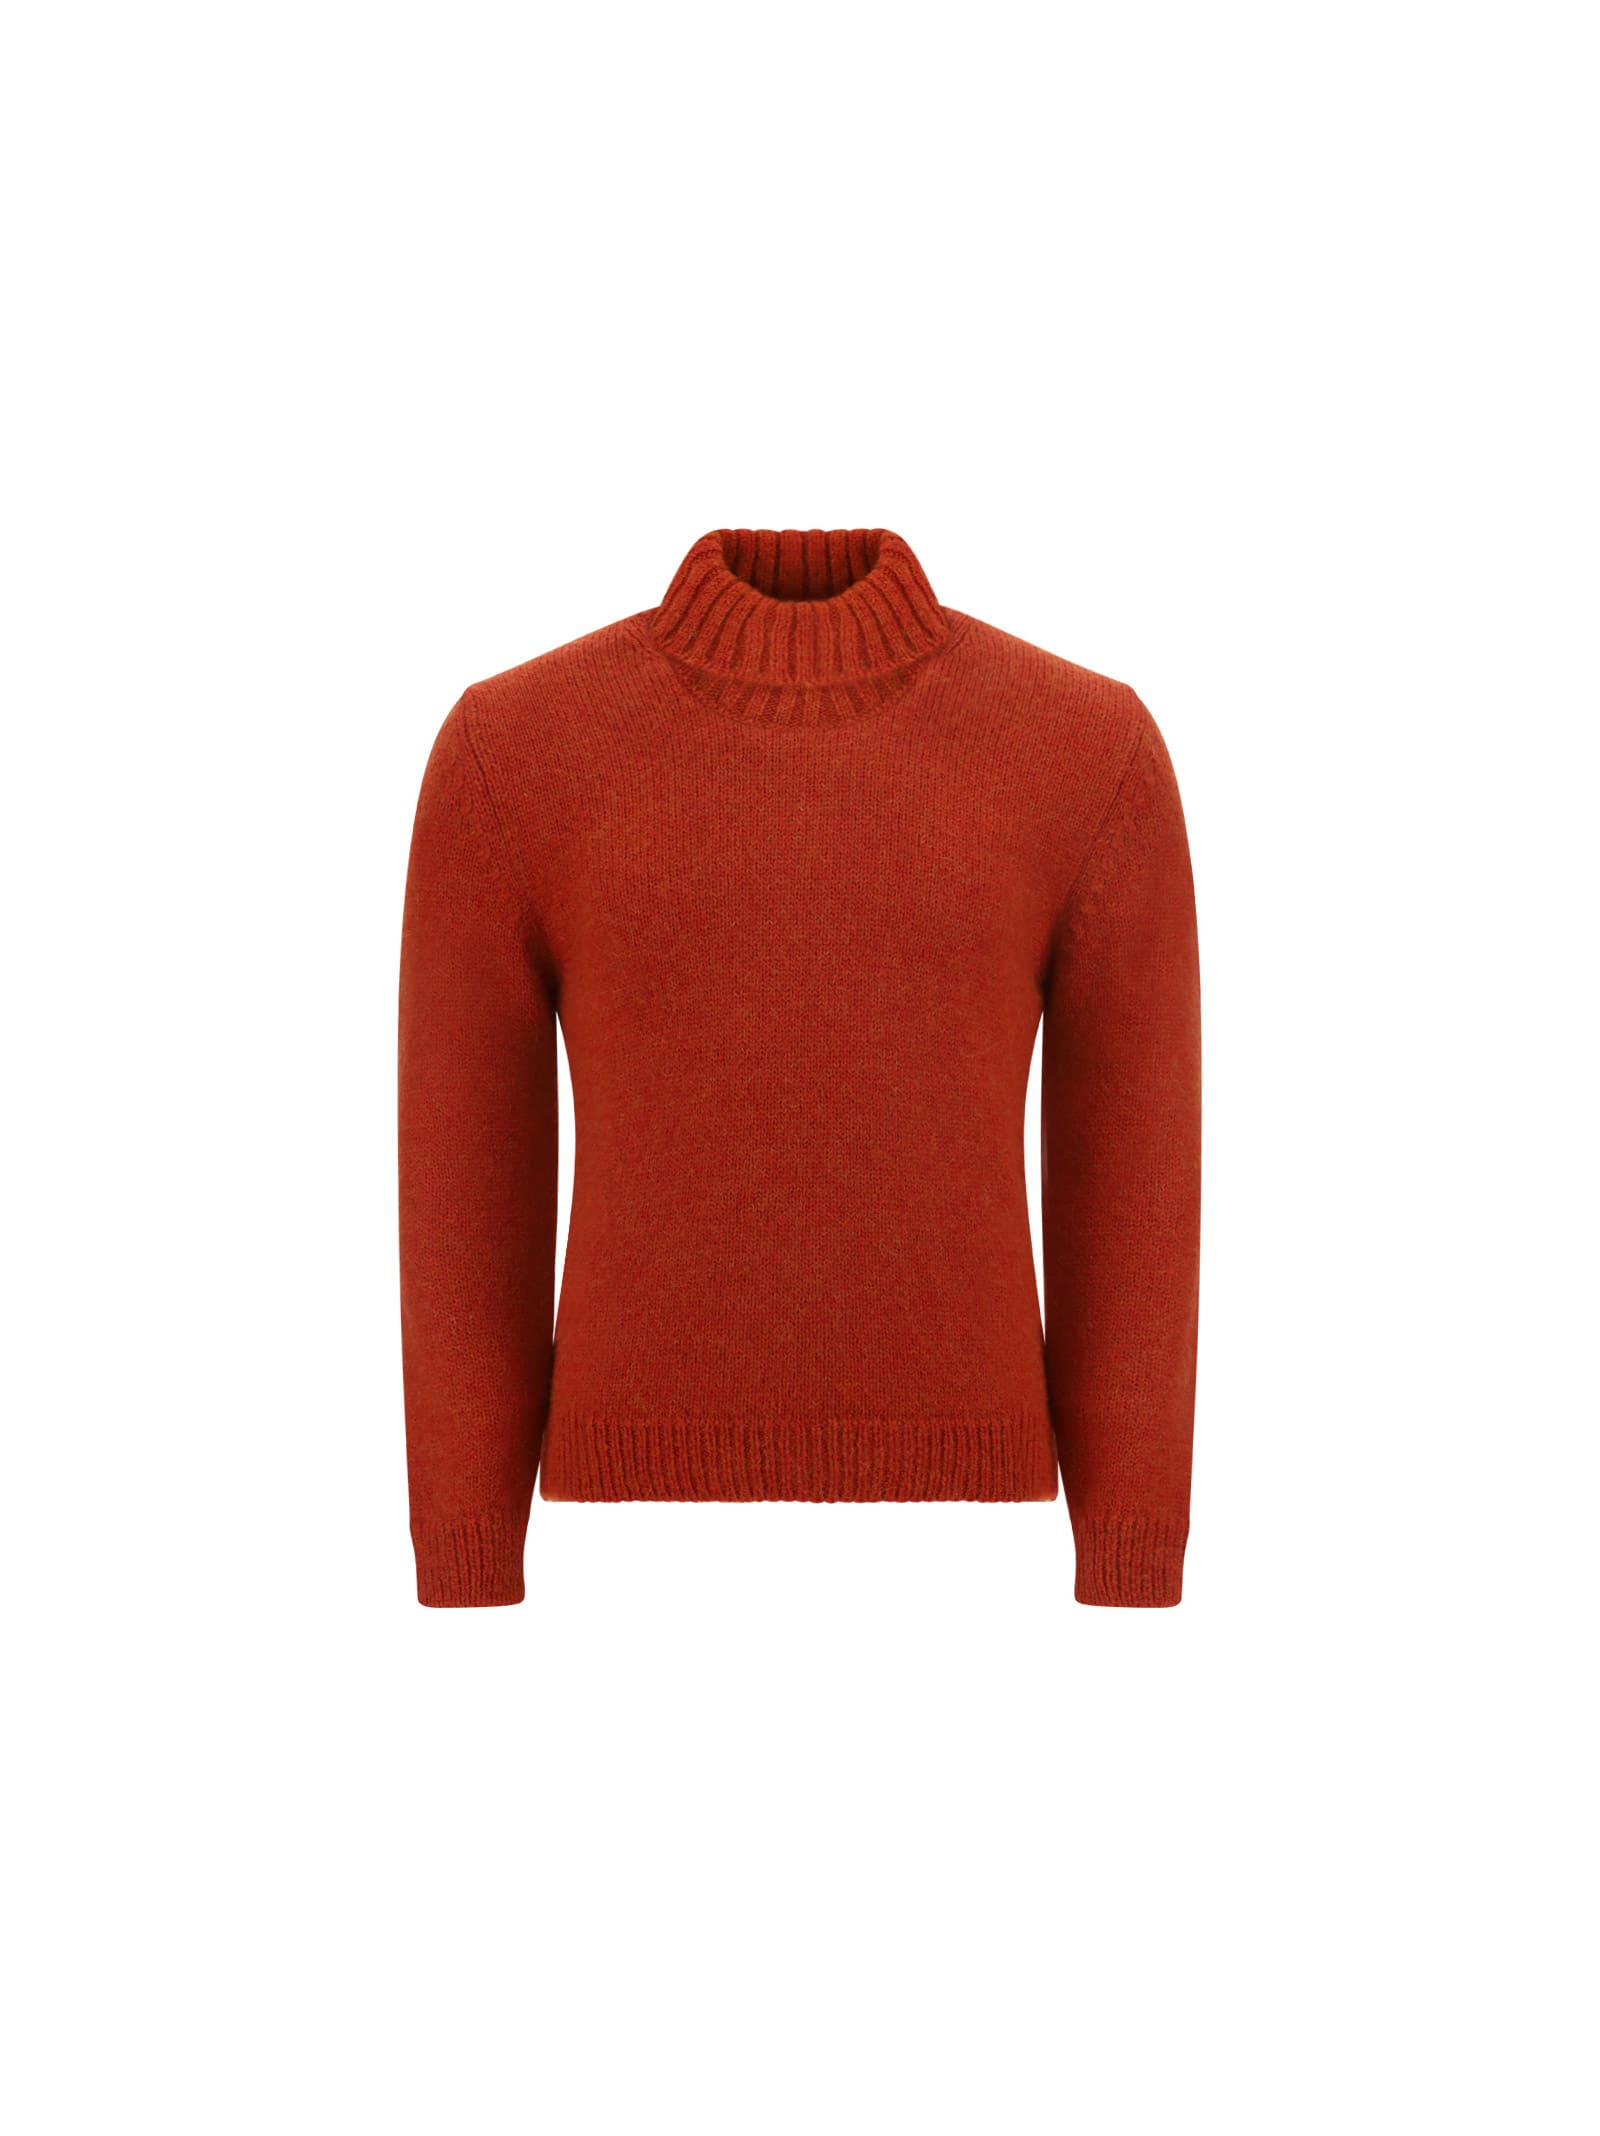 Settefili Cashmere Turtleneck Sweater